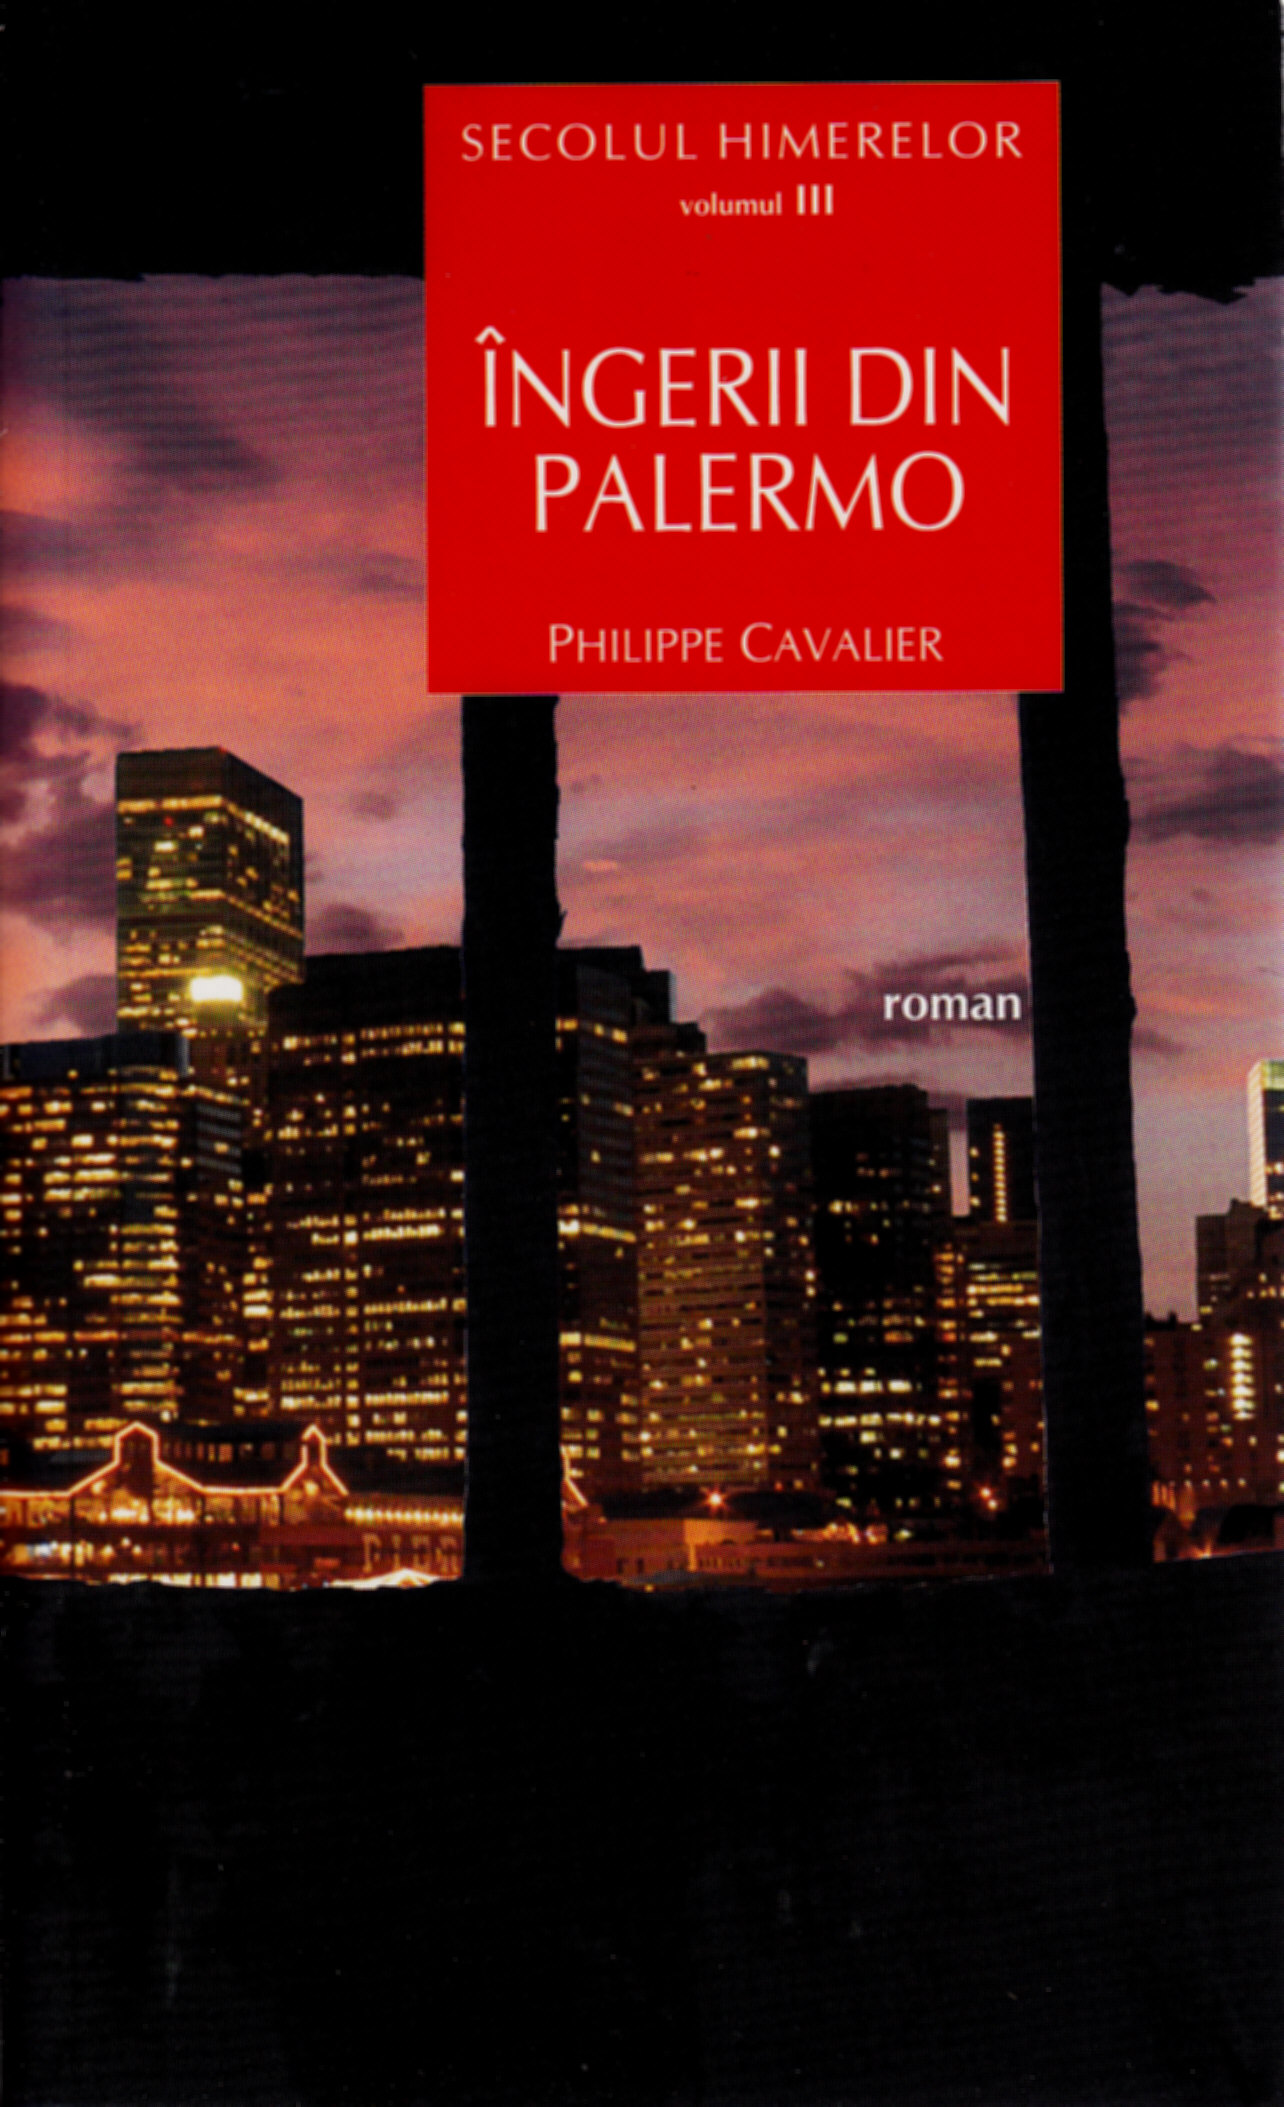 Secolul Himerelor vol. III: Ingerii din Palermo - Philippe Cavalier